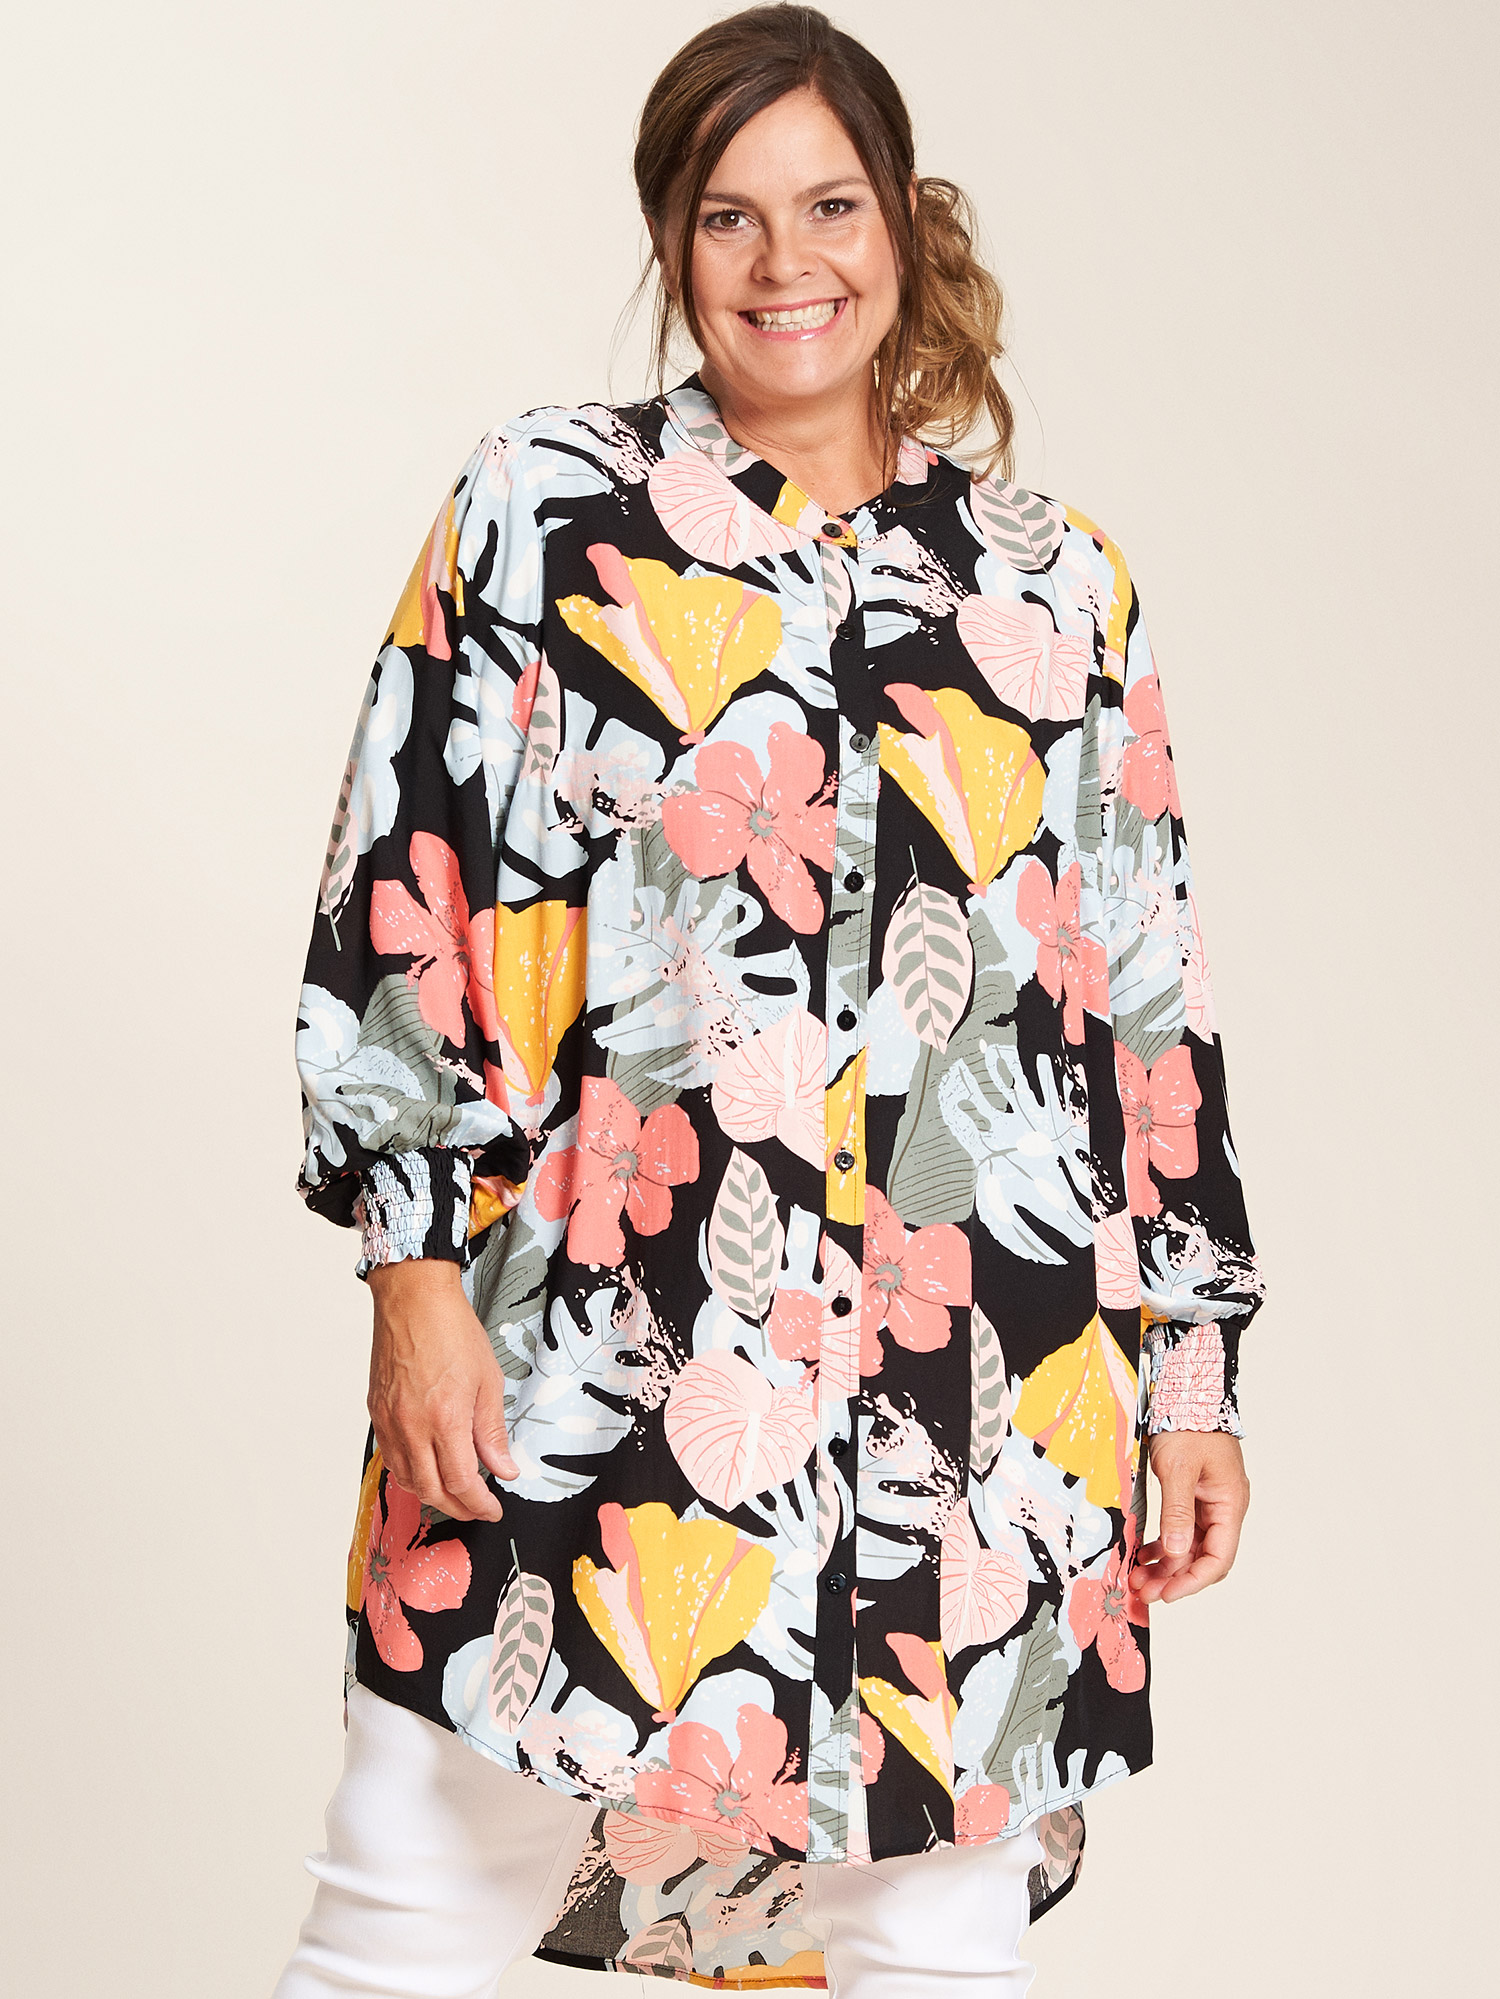 Ulrikke - Sort skjorte tunika med blomster print i smukke farver fra Gozzip